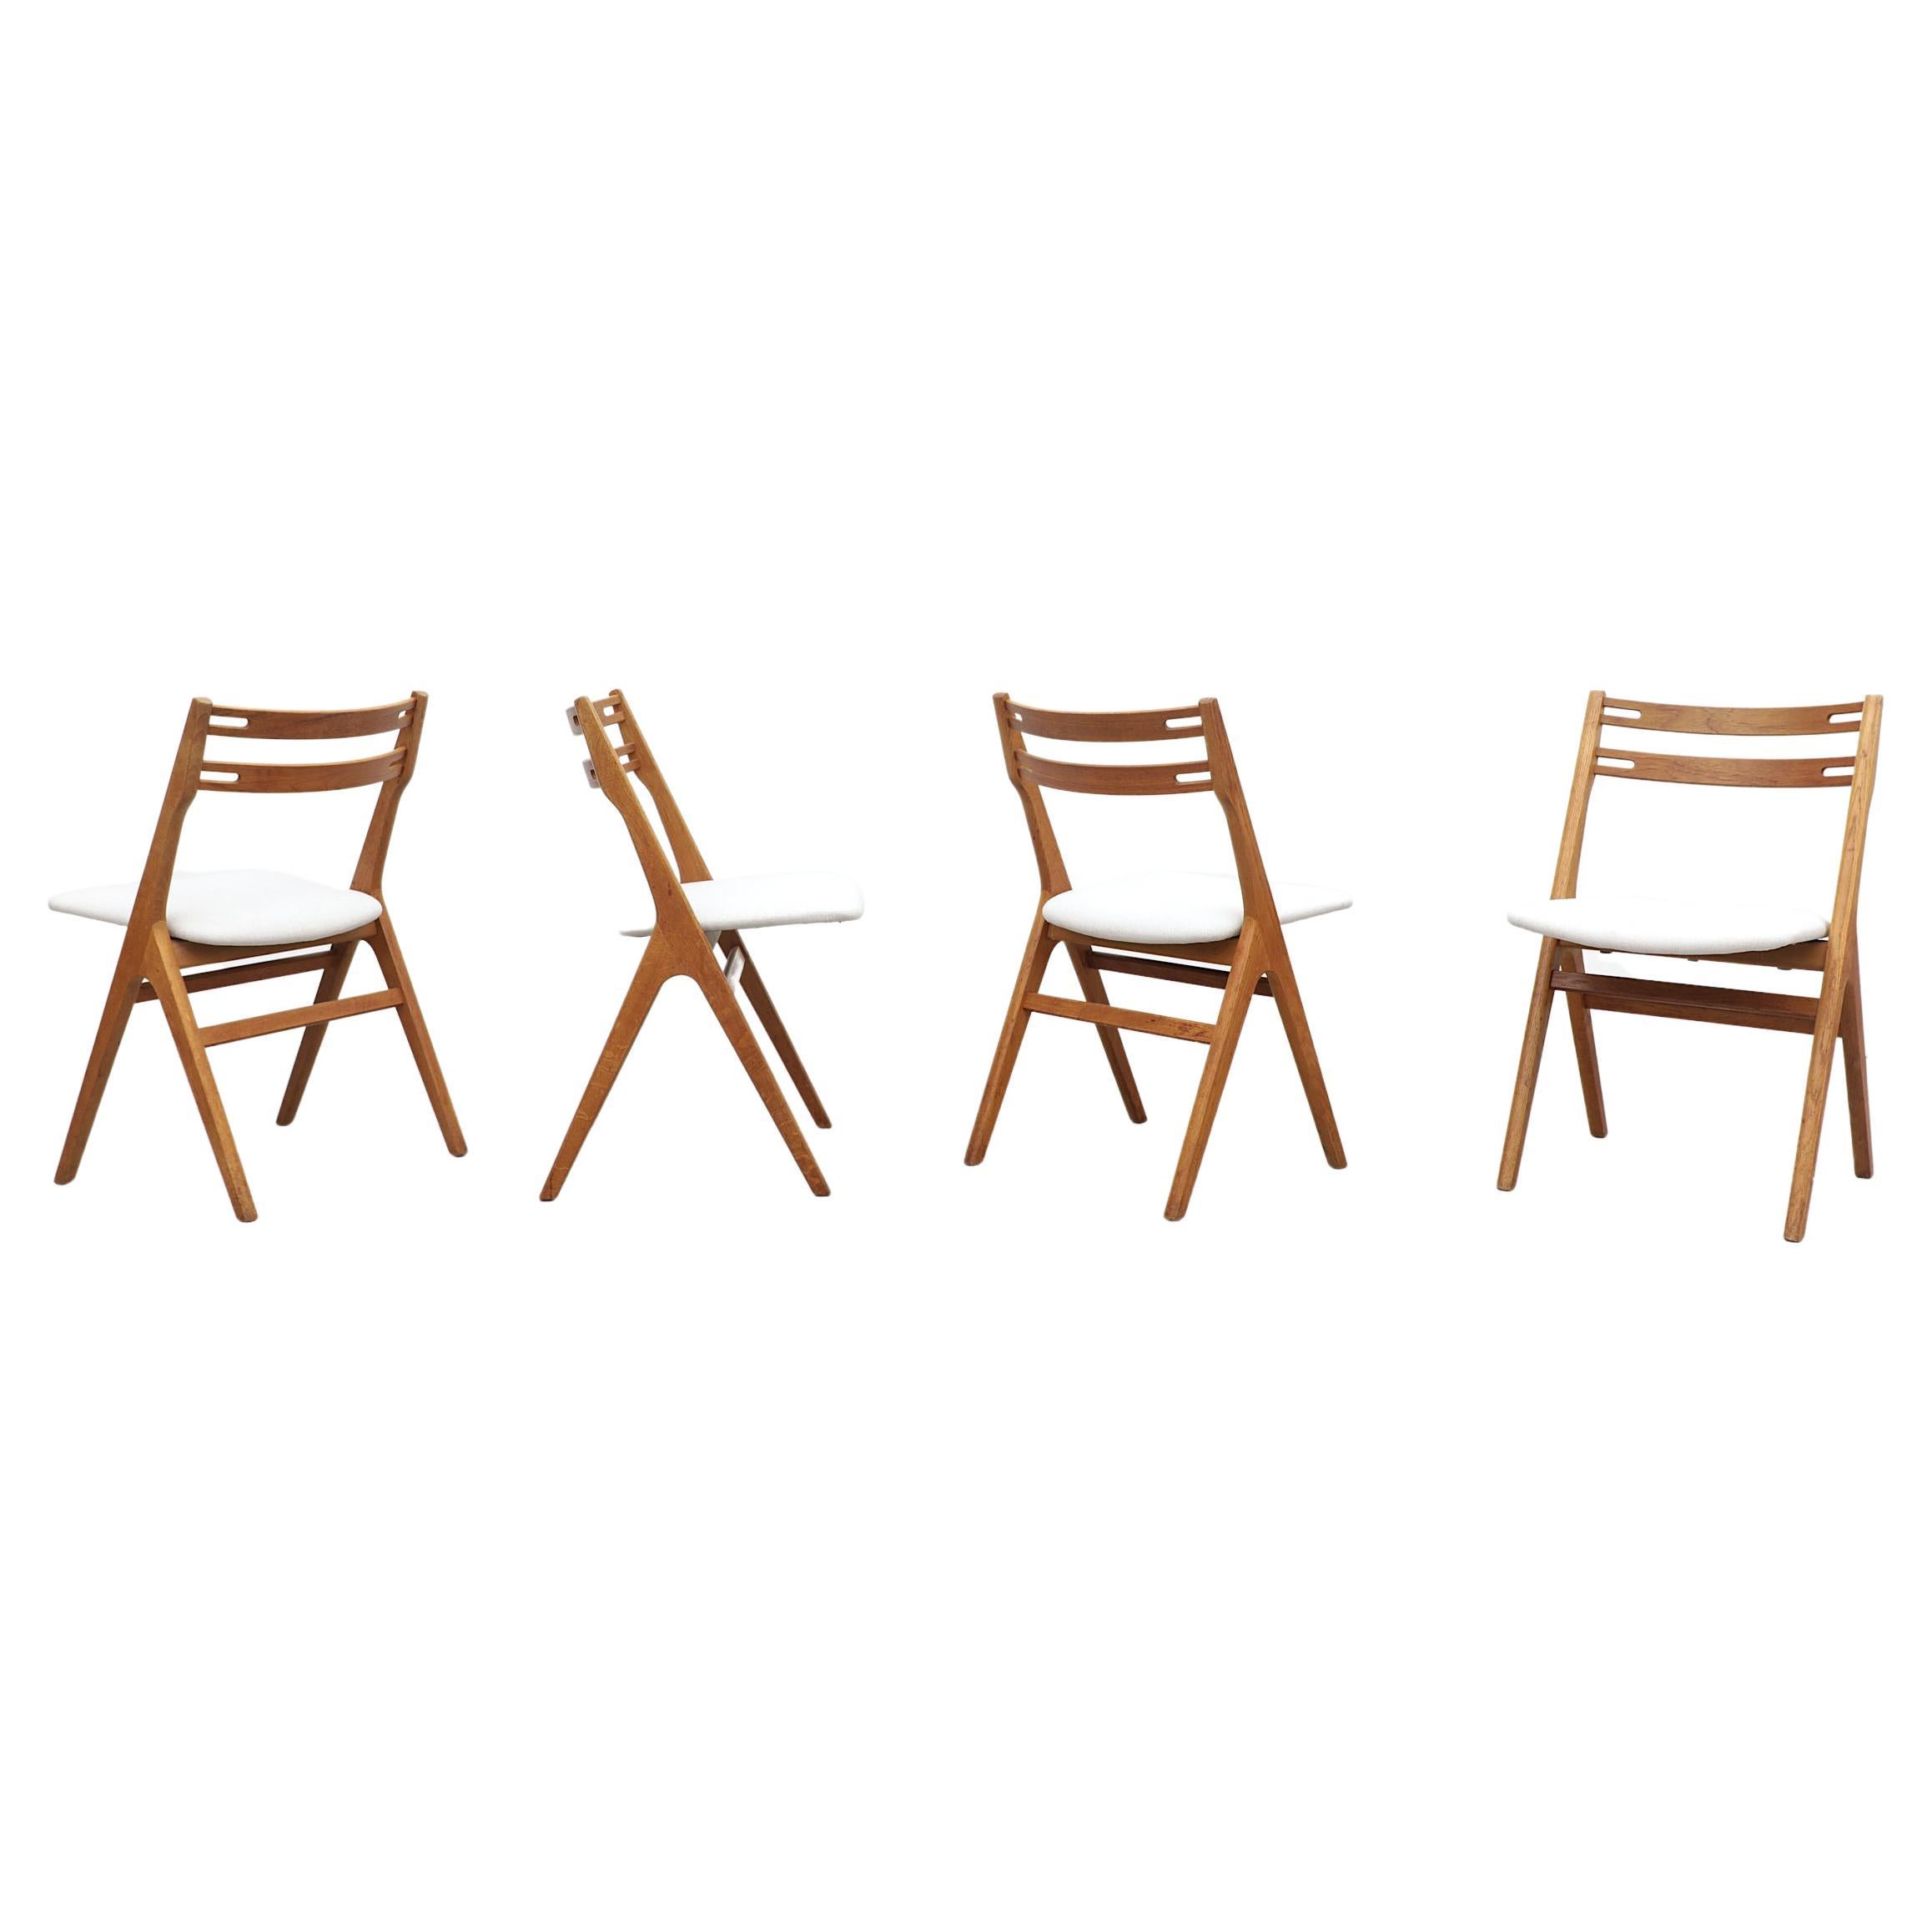 Set of 4 Hans Wegner Inspired Oak Dining Chairs by Sibast